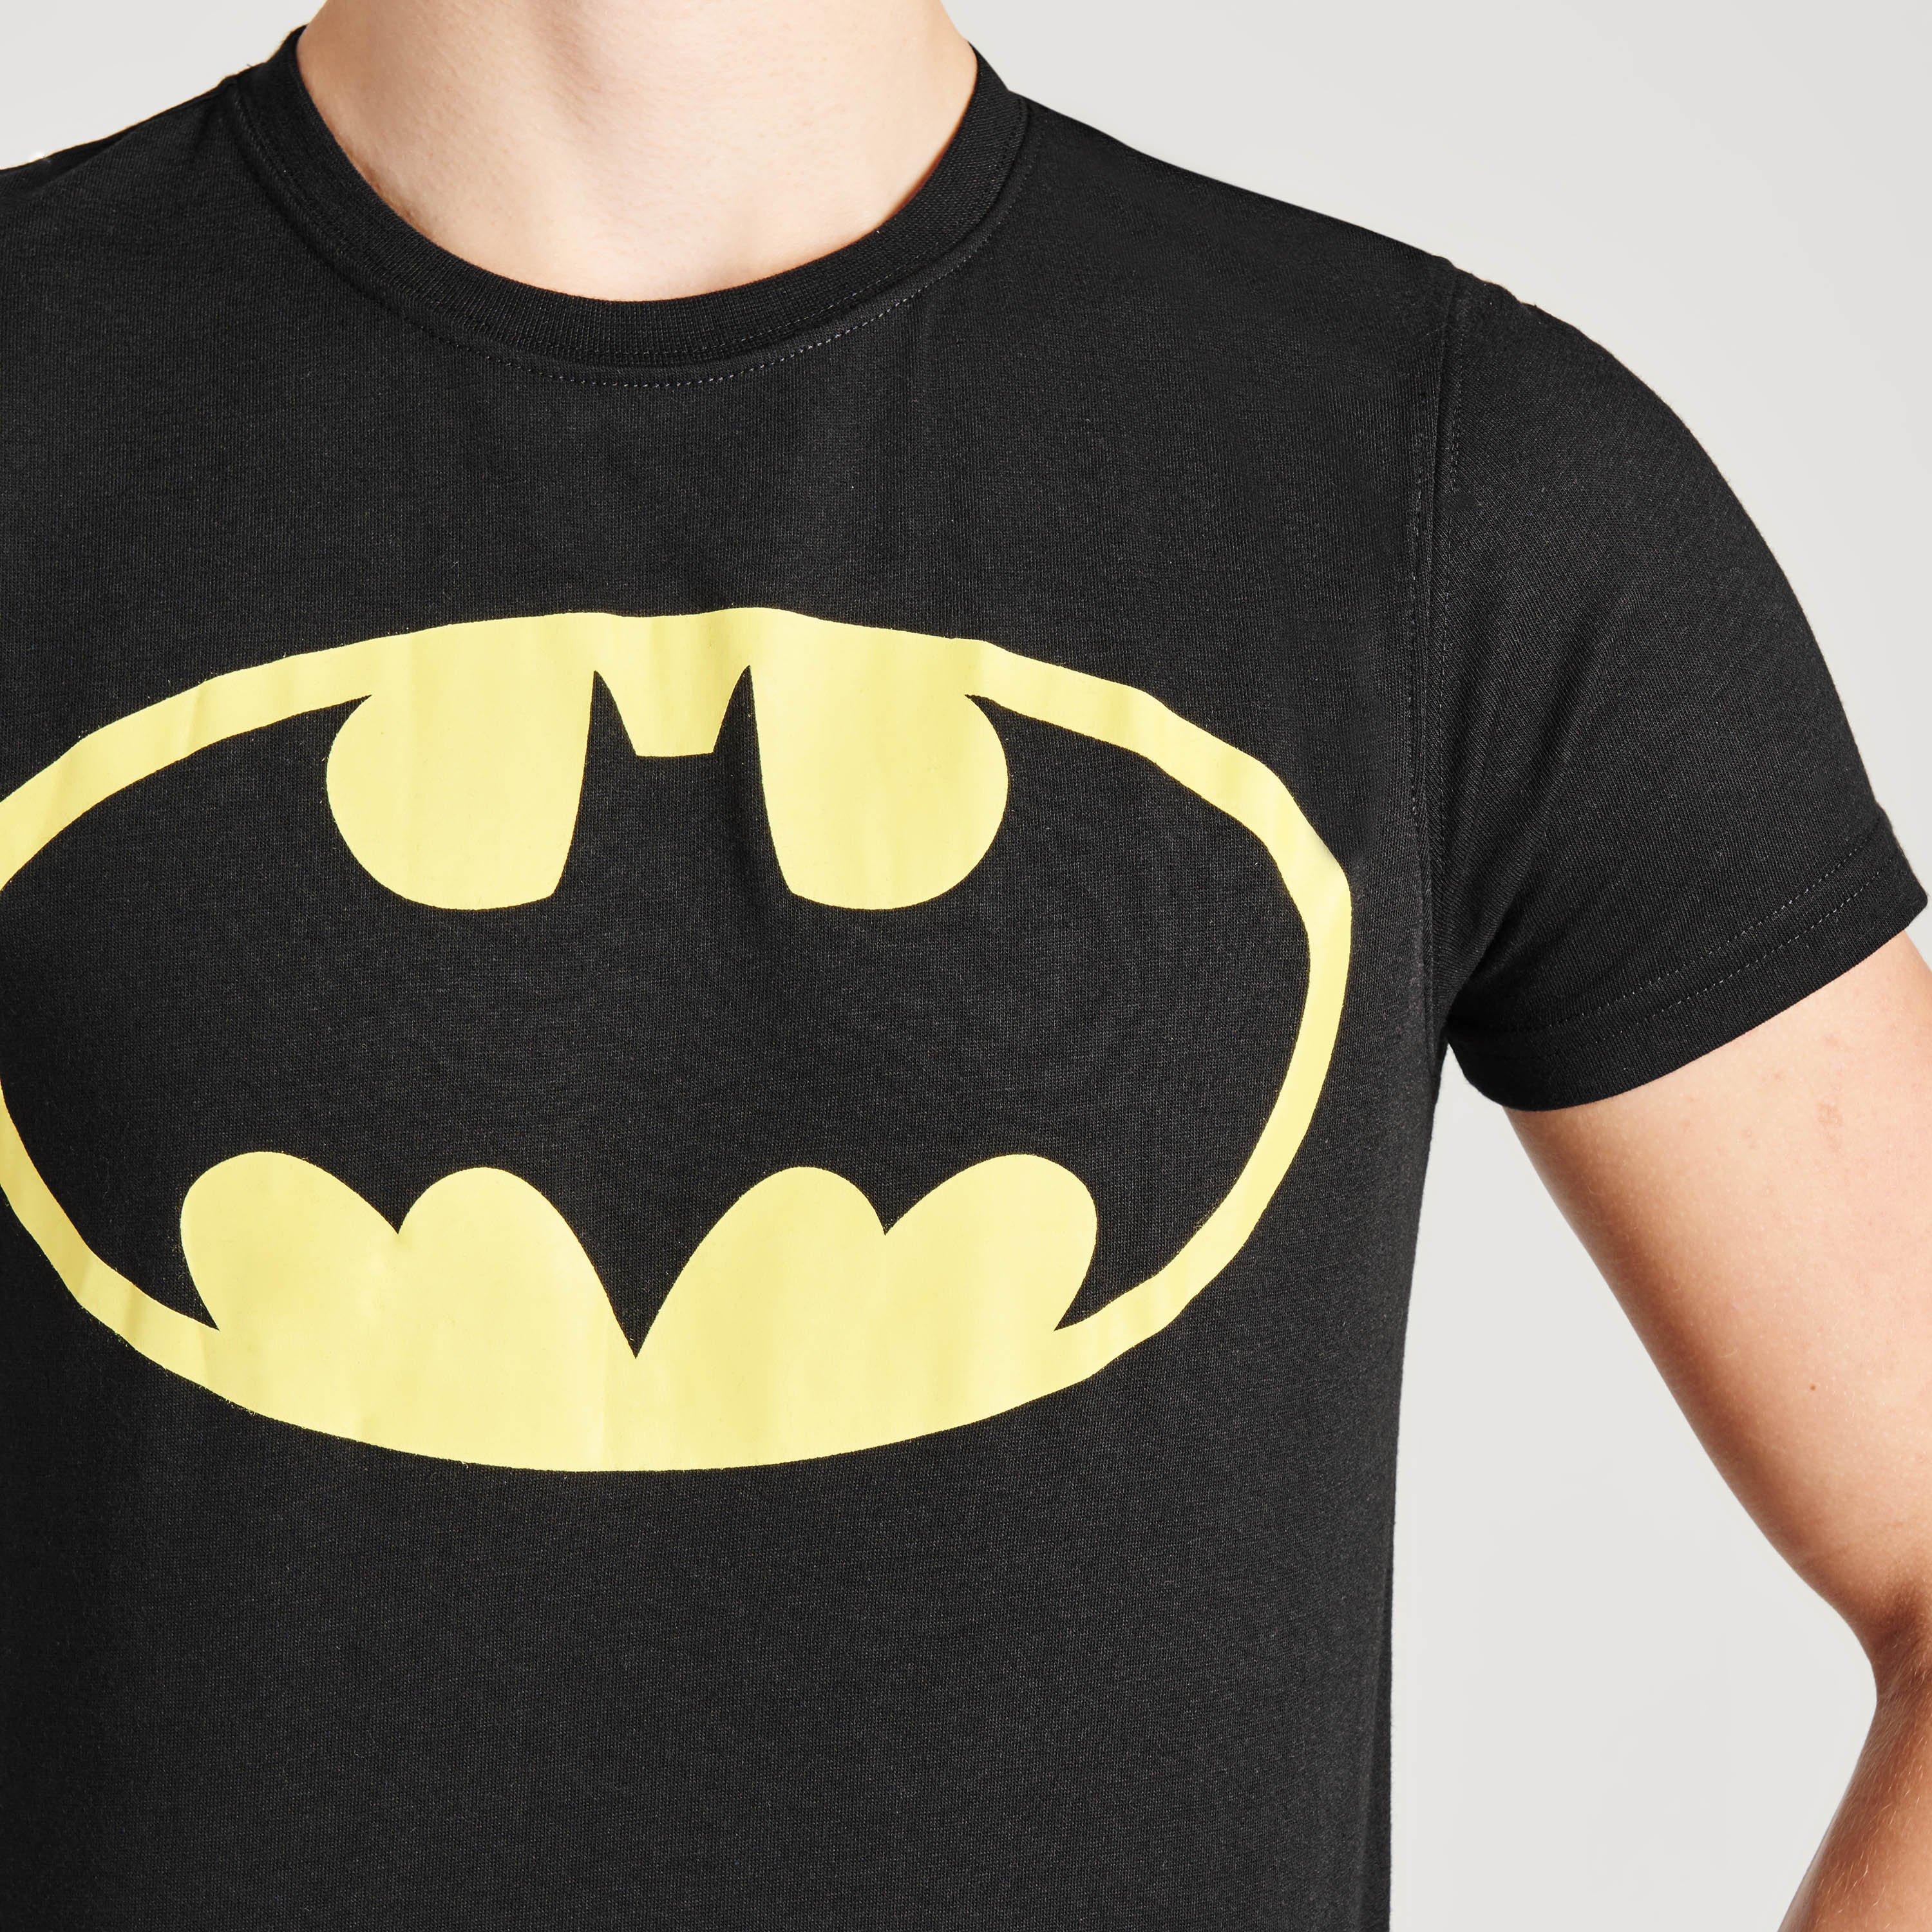 Batman t. Бэтмен т ширт. Значок Бэтмена. Черная футболка с эмблемой Бэтмена. Знак Бэтмена на одежде.